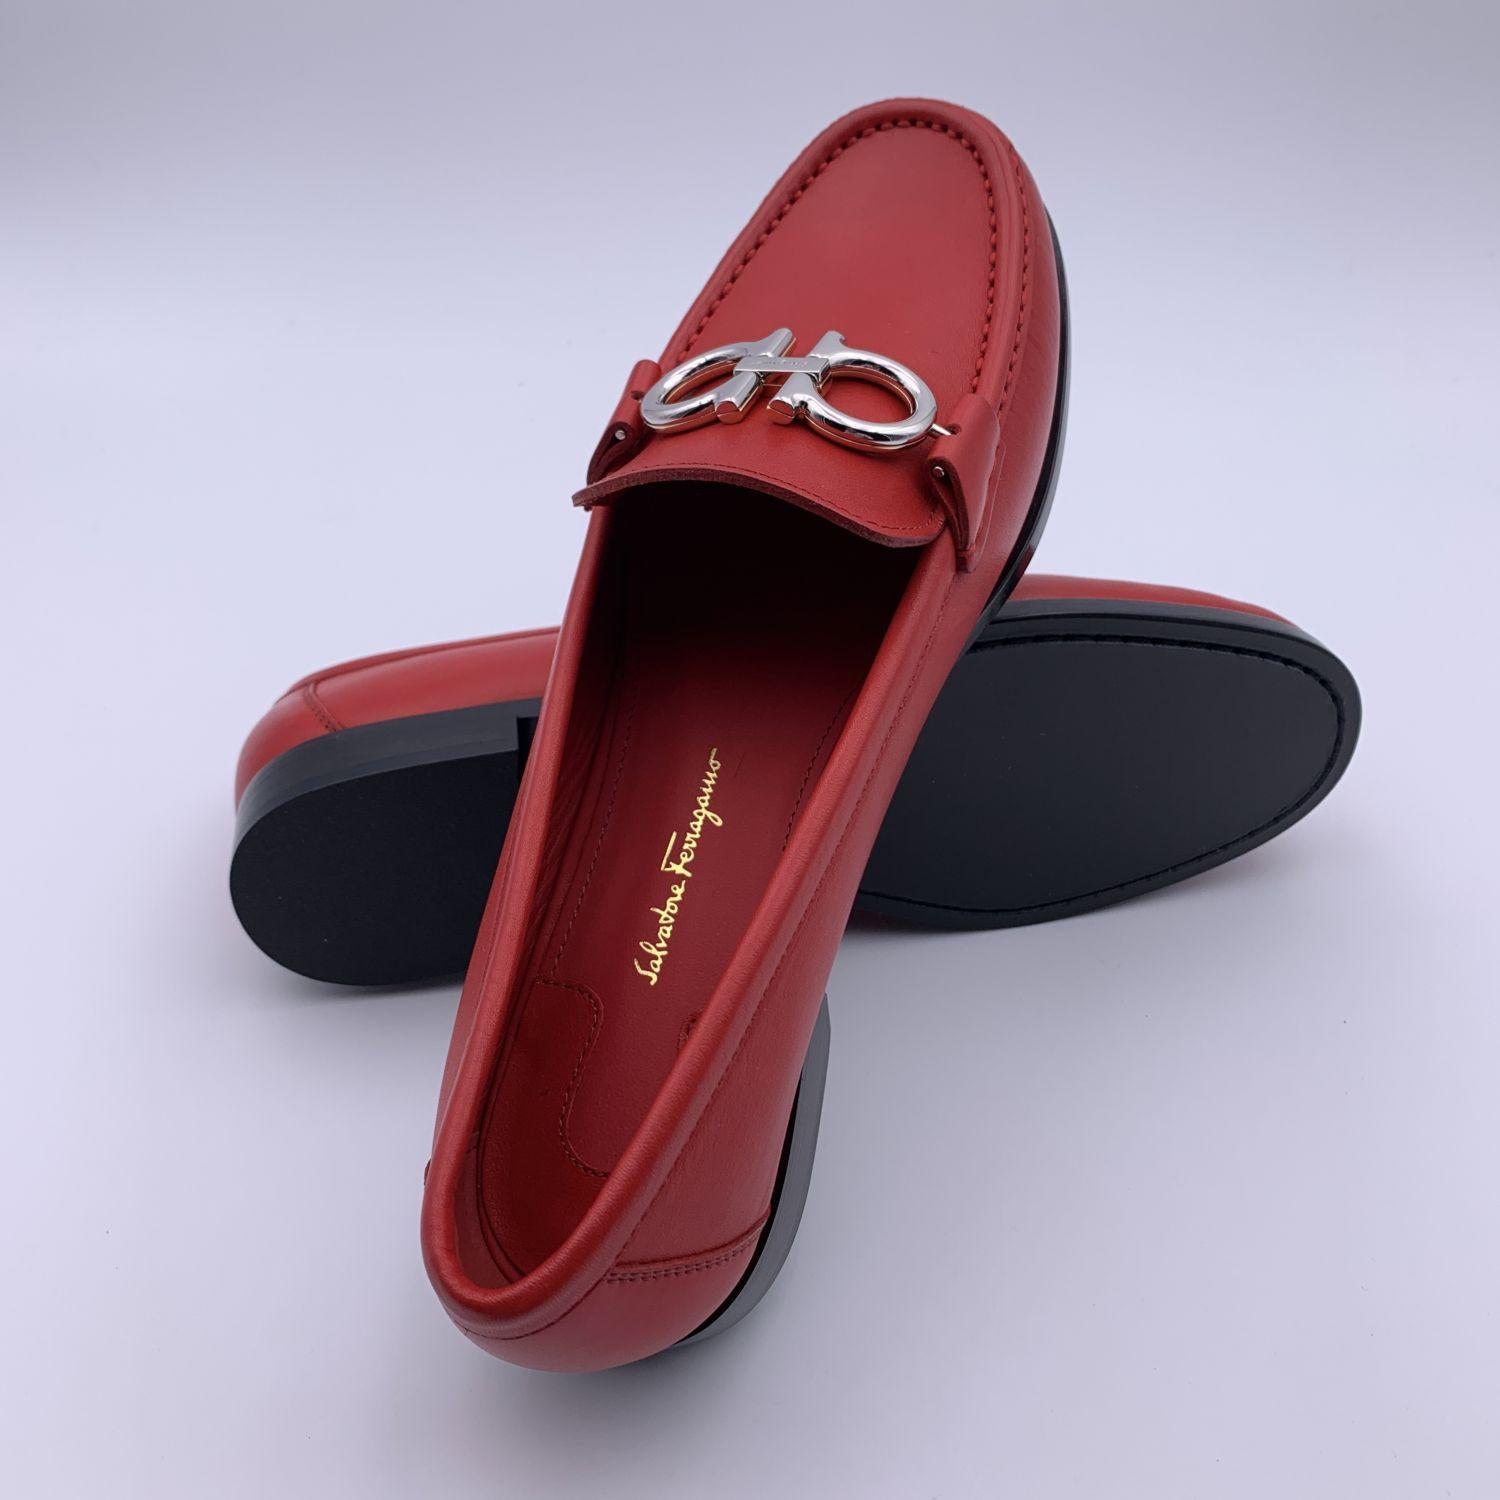 Women's Salvatore Ferragamo Leather Rolo Loafers Moccassins Size 5.5C 36C